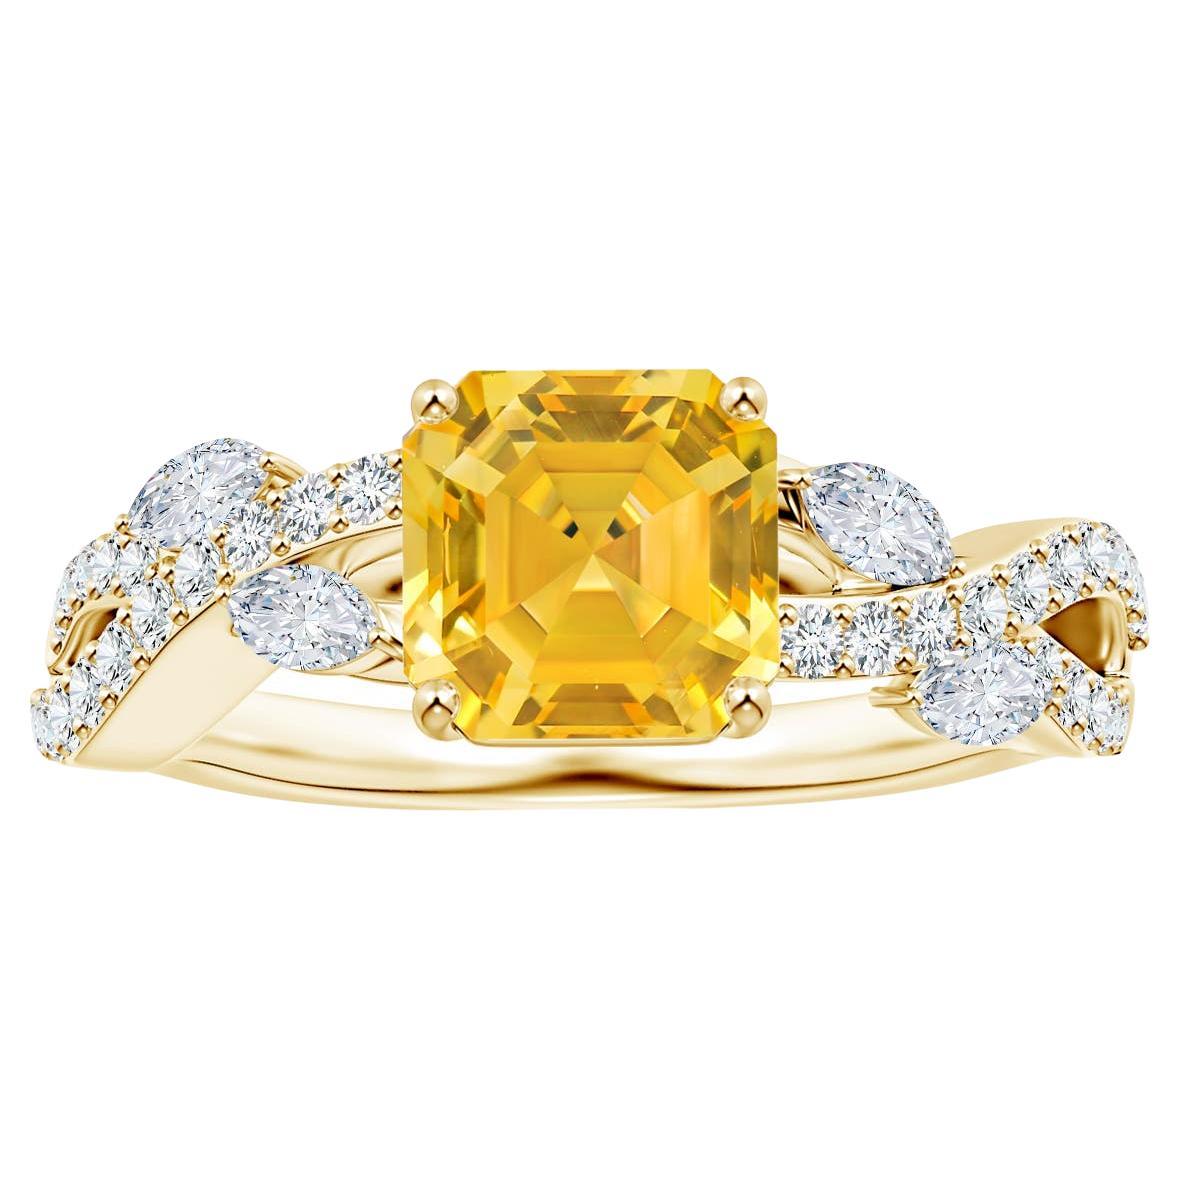 Angara Gia Certified Emerald-Cut Yellow Sapphire Diamond Ring in Yellow Gold